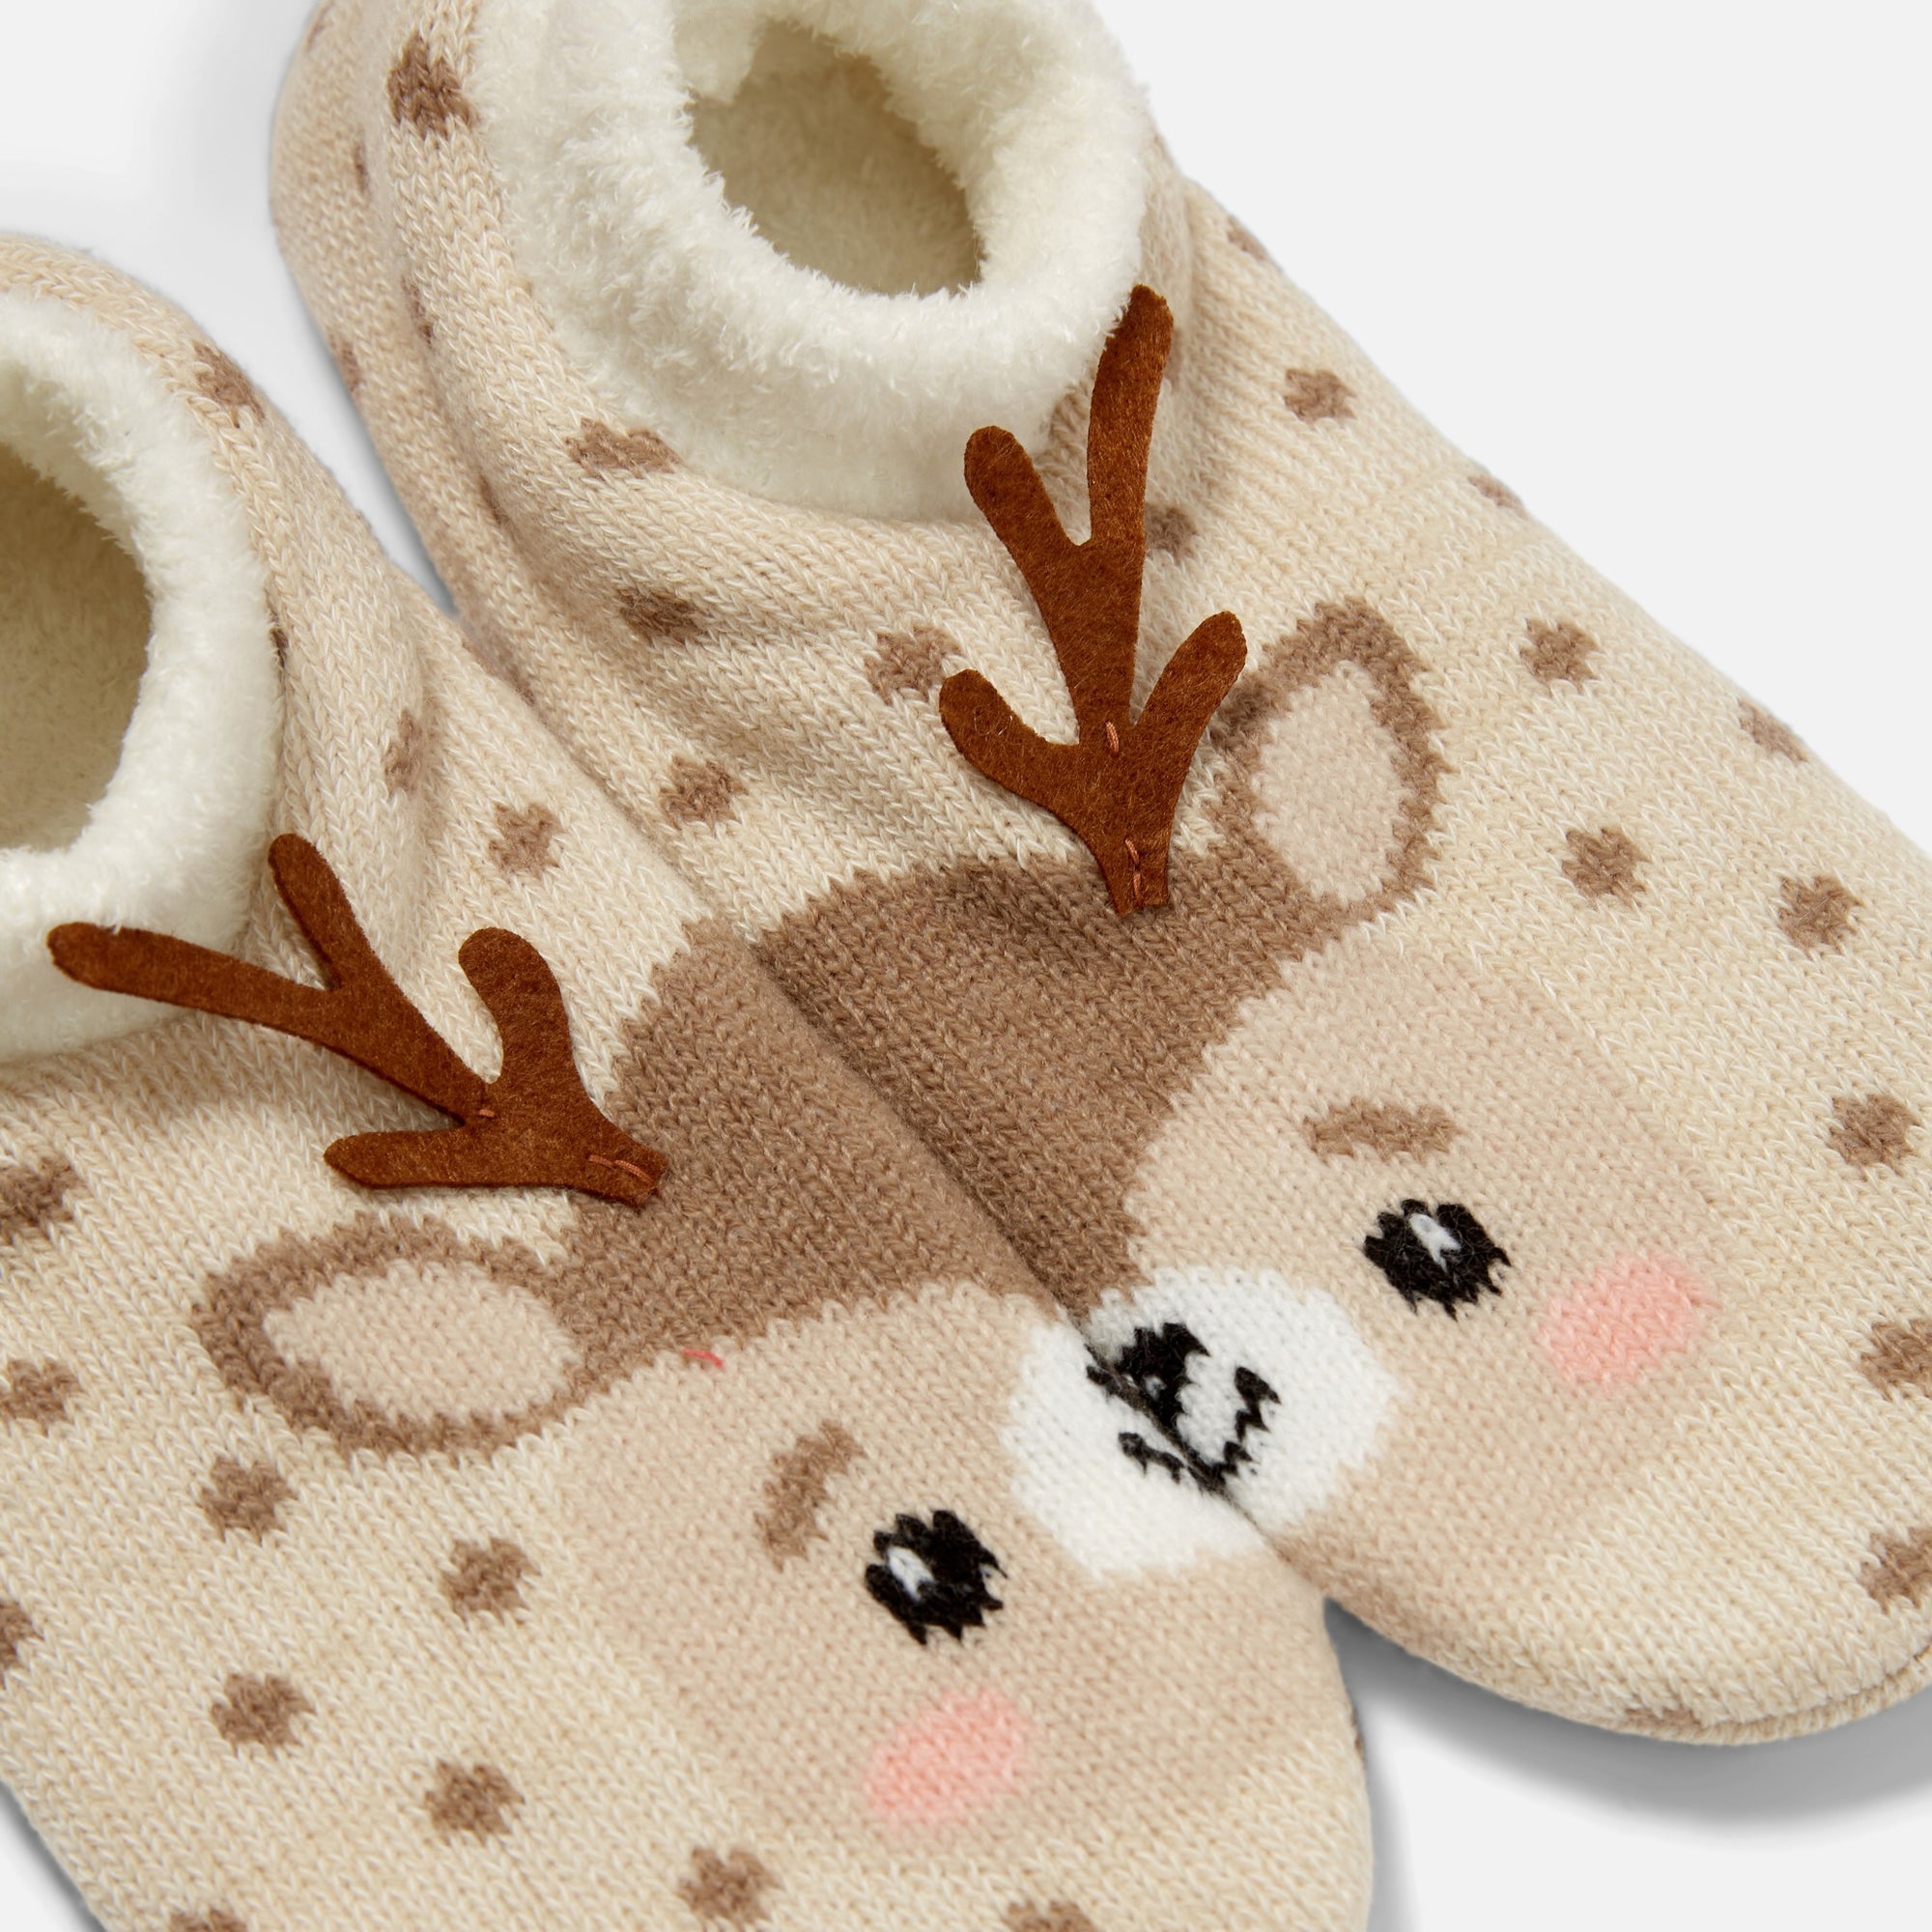 Beige slippers with deer